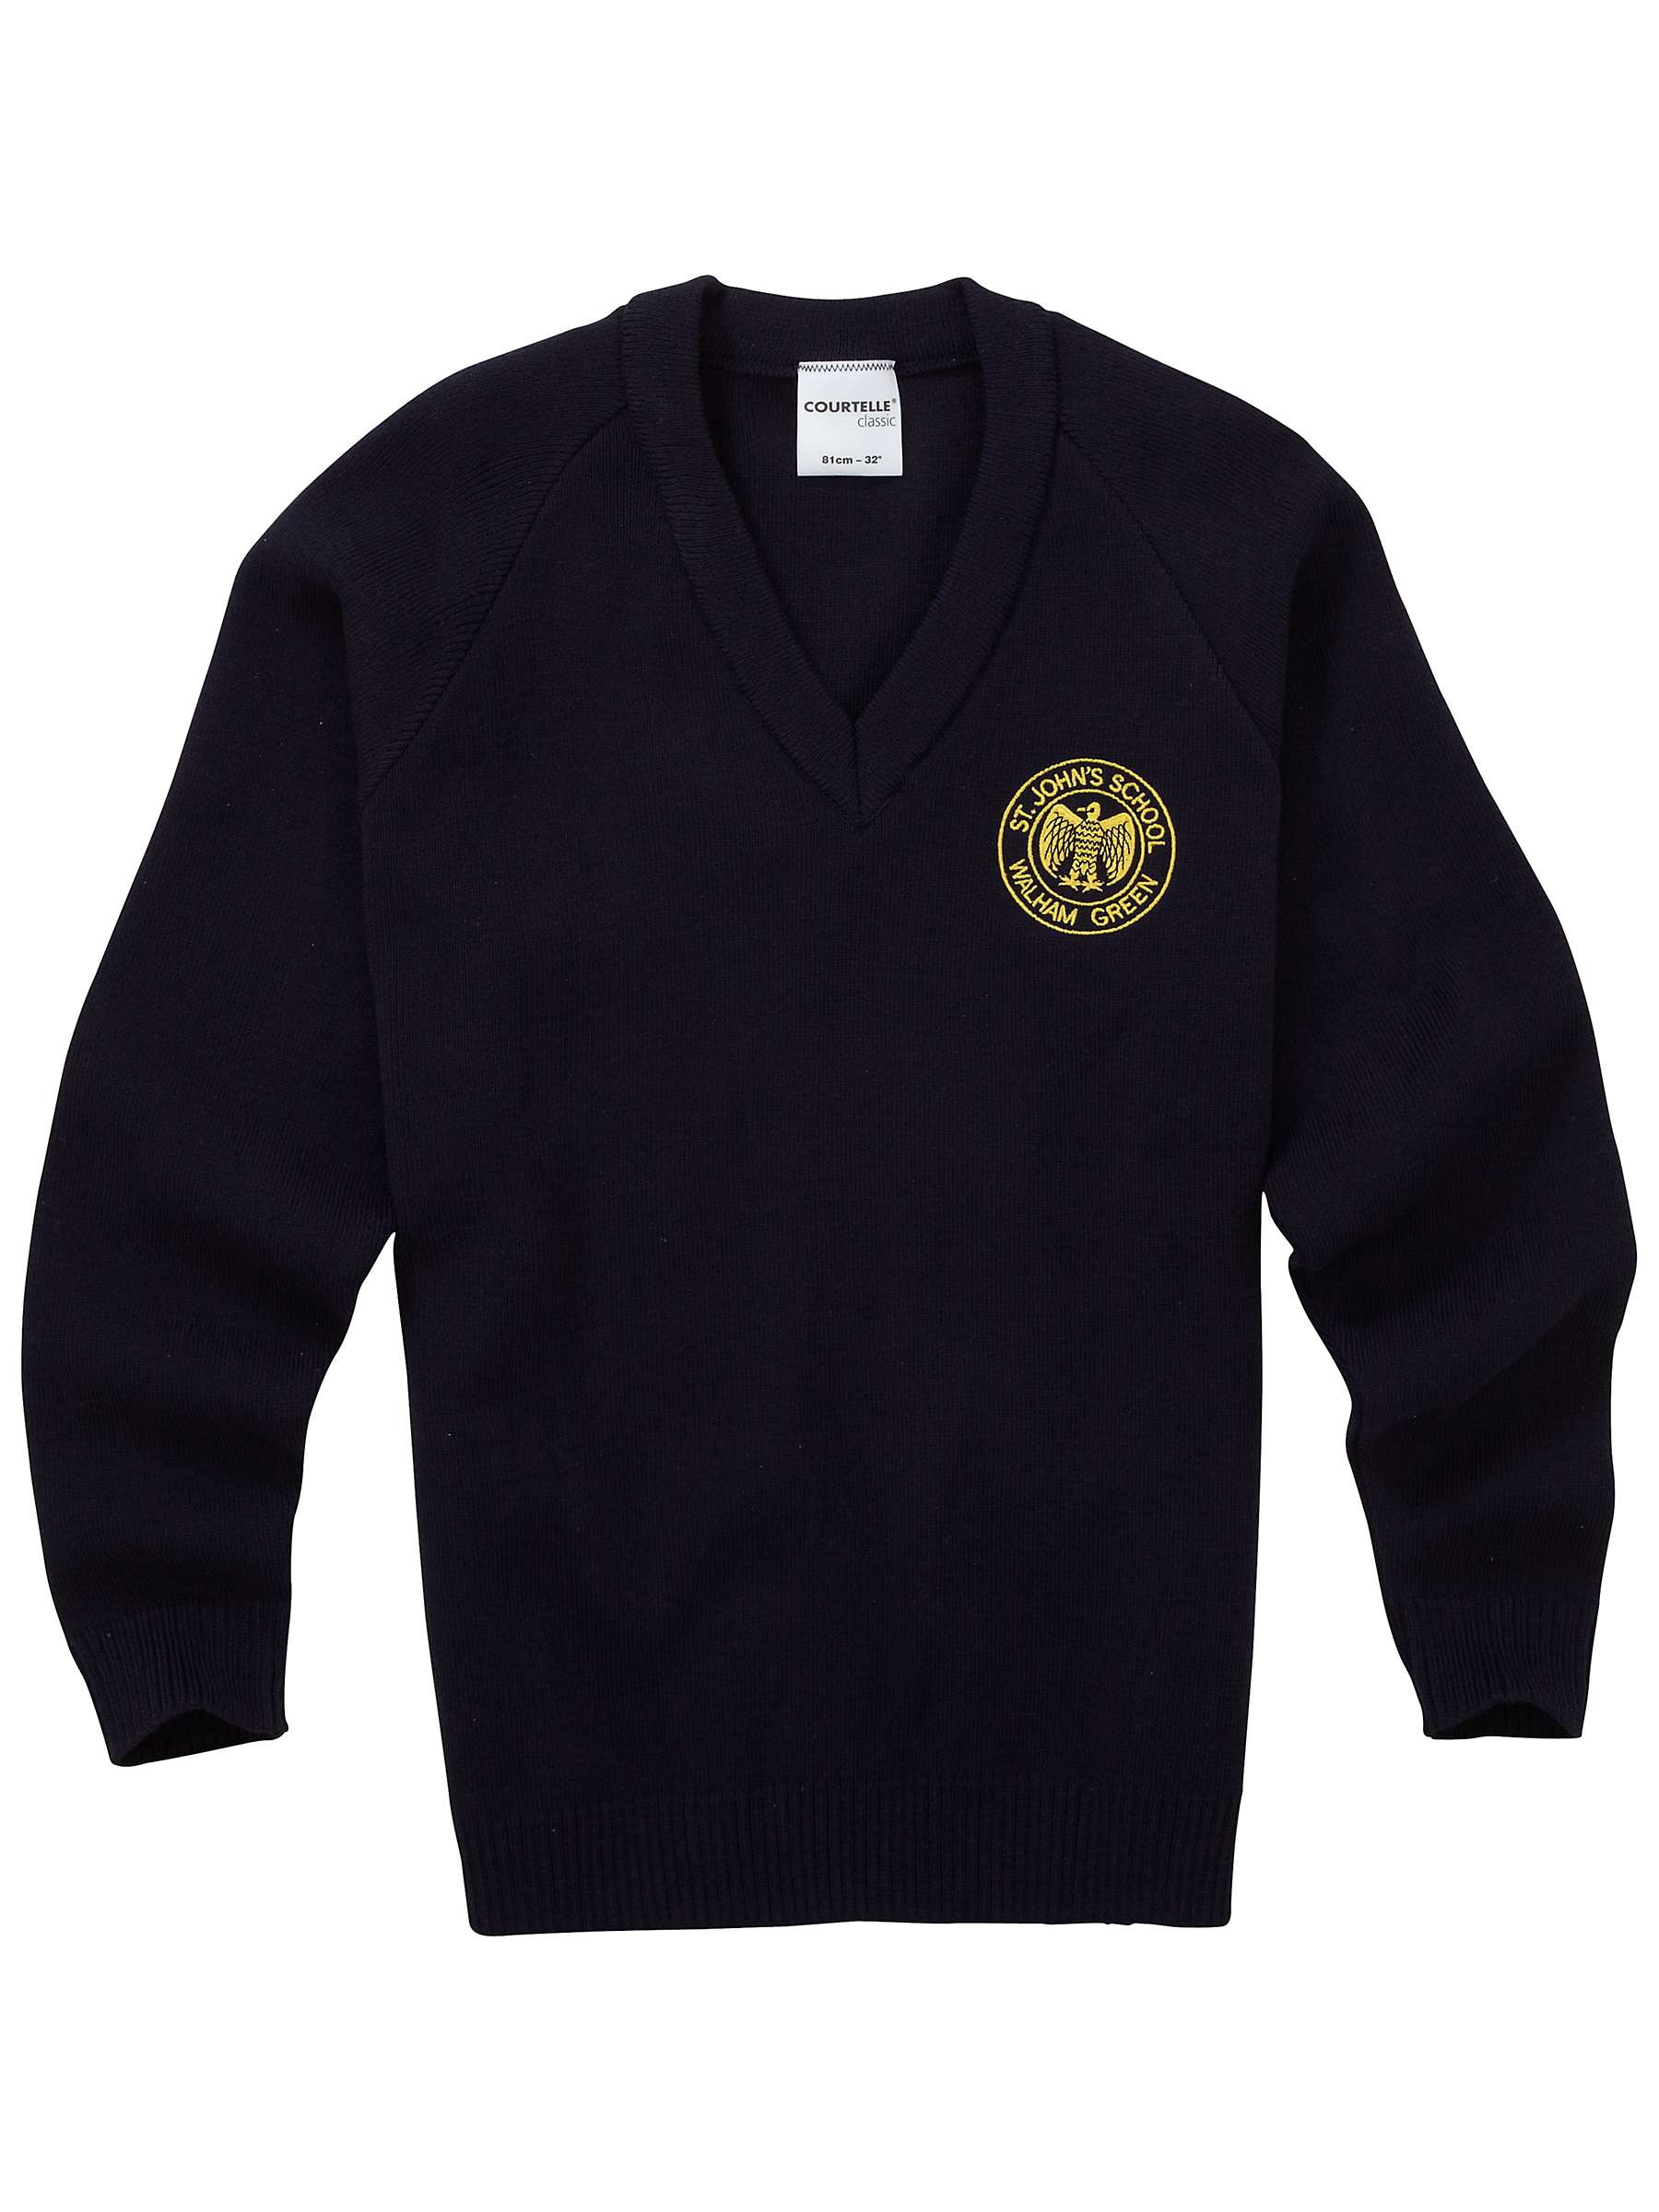 Buy St John's Walham Green CE Primary School Boys' Pullover, Navy Online at johnlewis.com